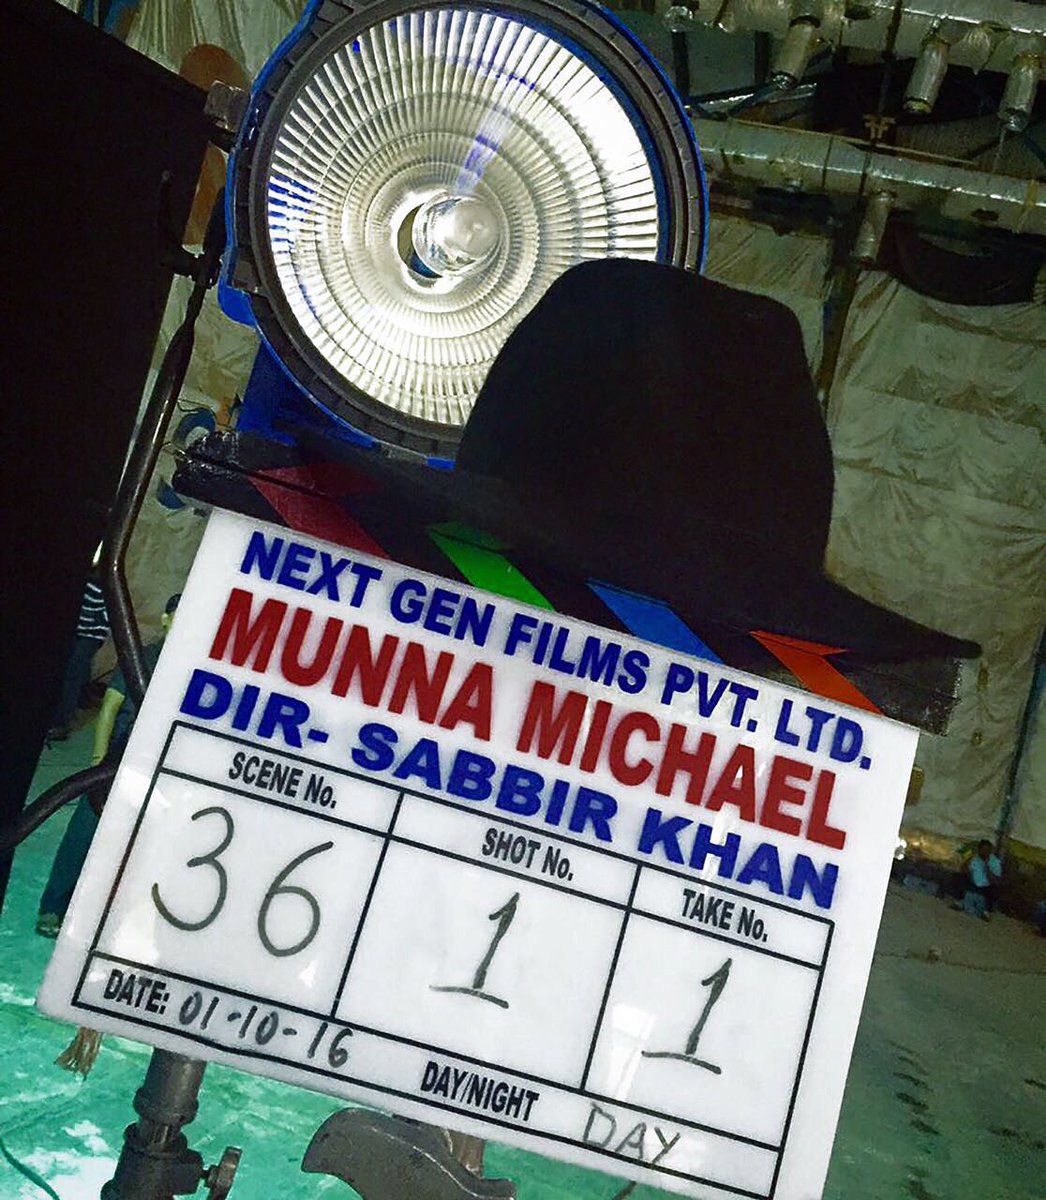 .@sabbir24x7's #MunnaMichael starring @iTIGERSHROFF & @AgerwalNidhhi has gone on floors. @ErosNow @vikirajani @NextGenFilm #Bollywood